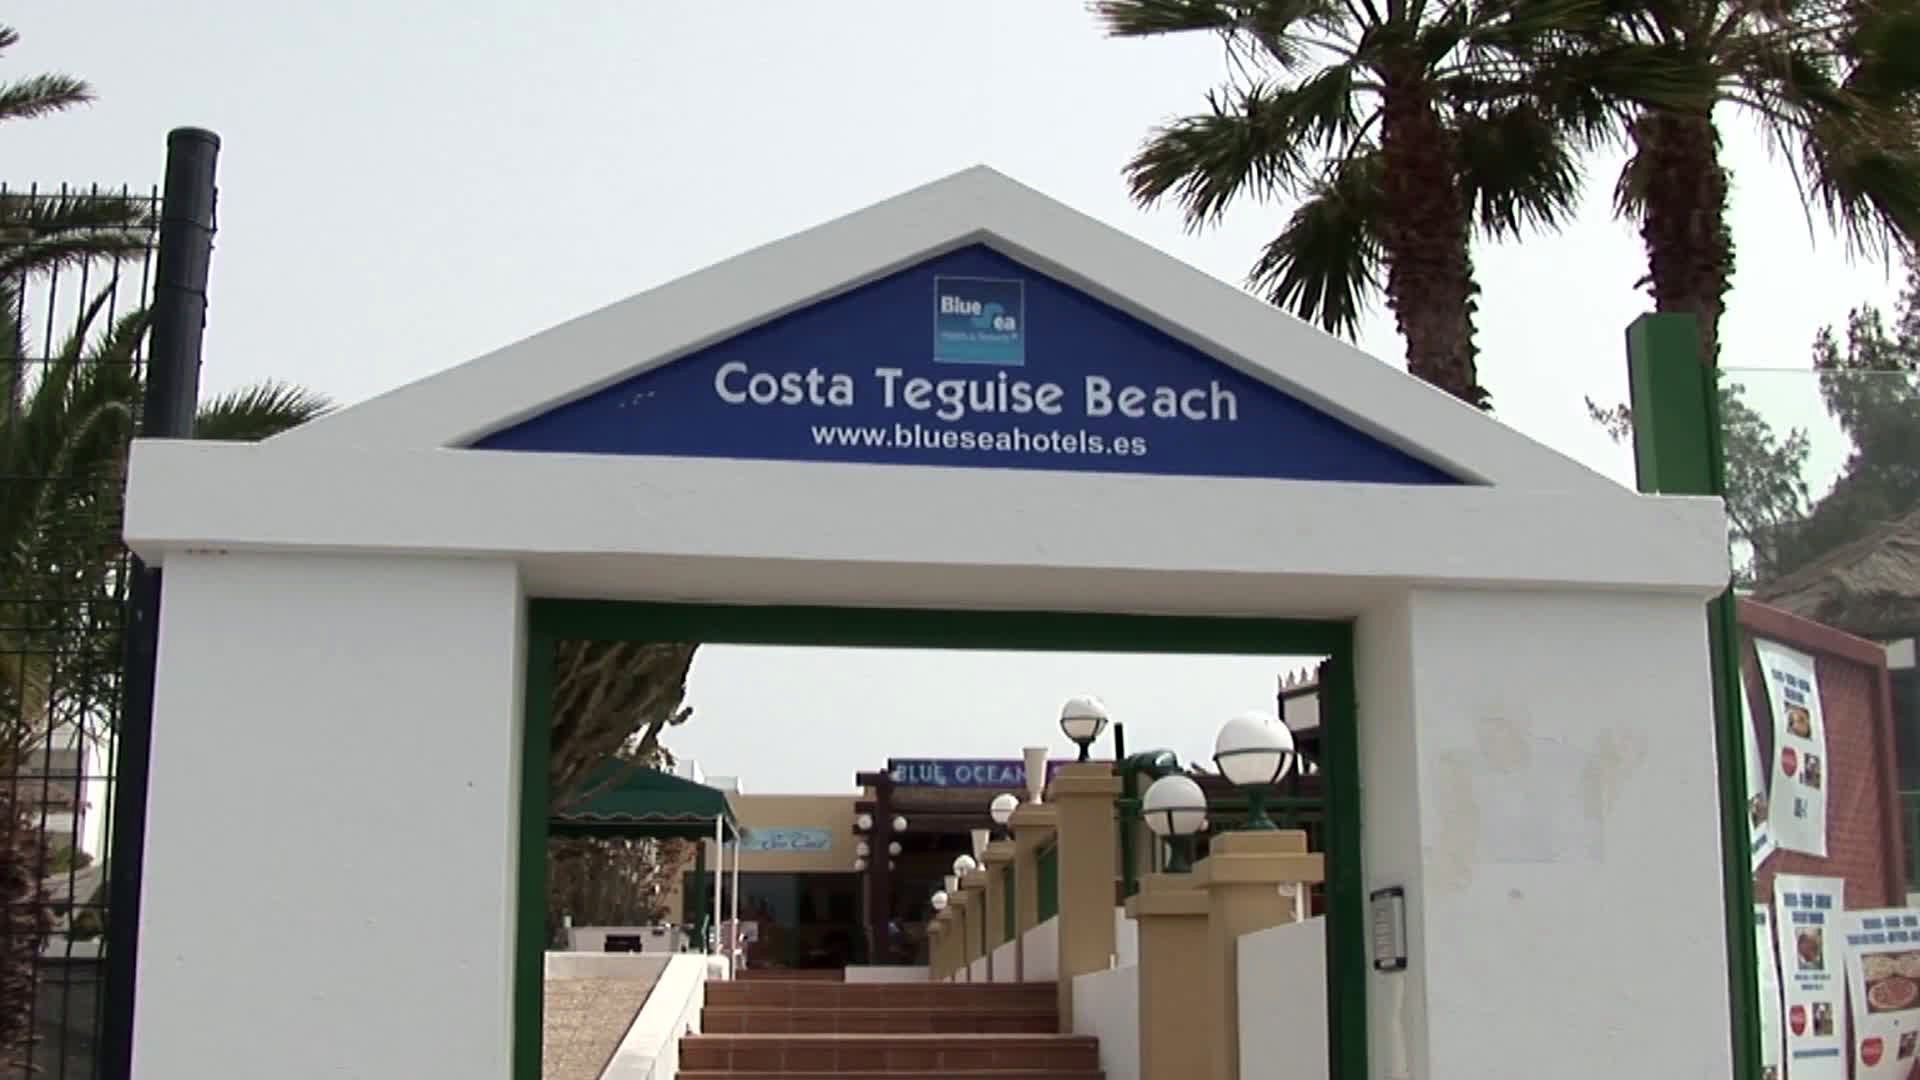 Blue Sea Costa Teguise Beach